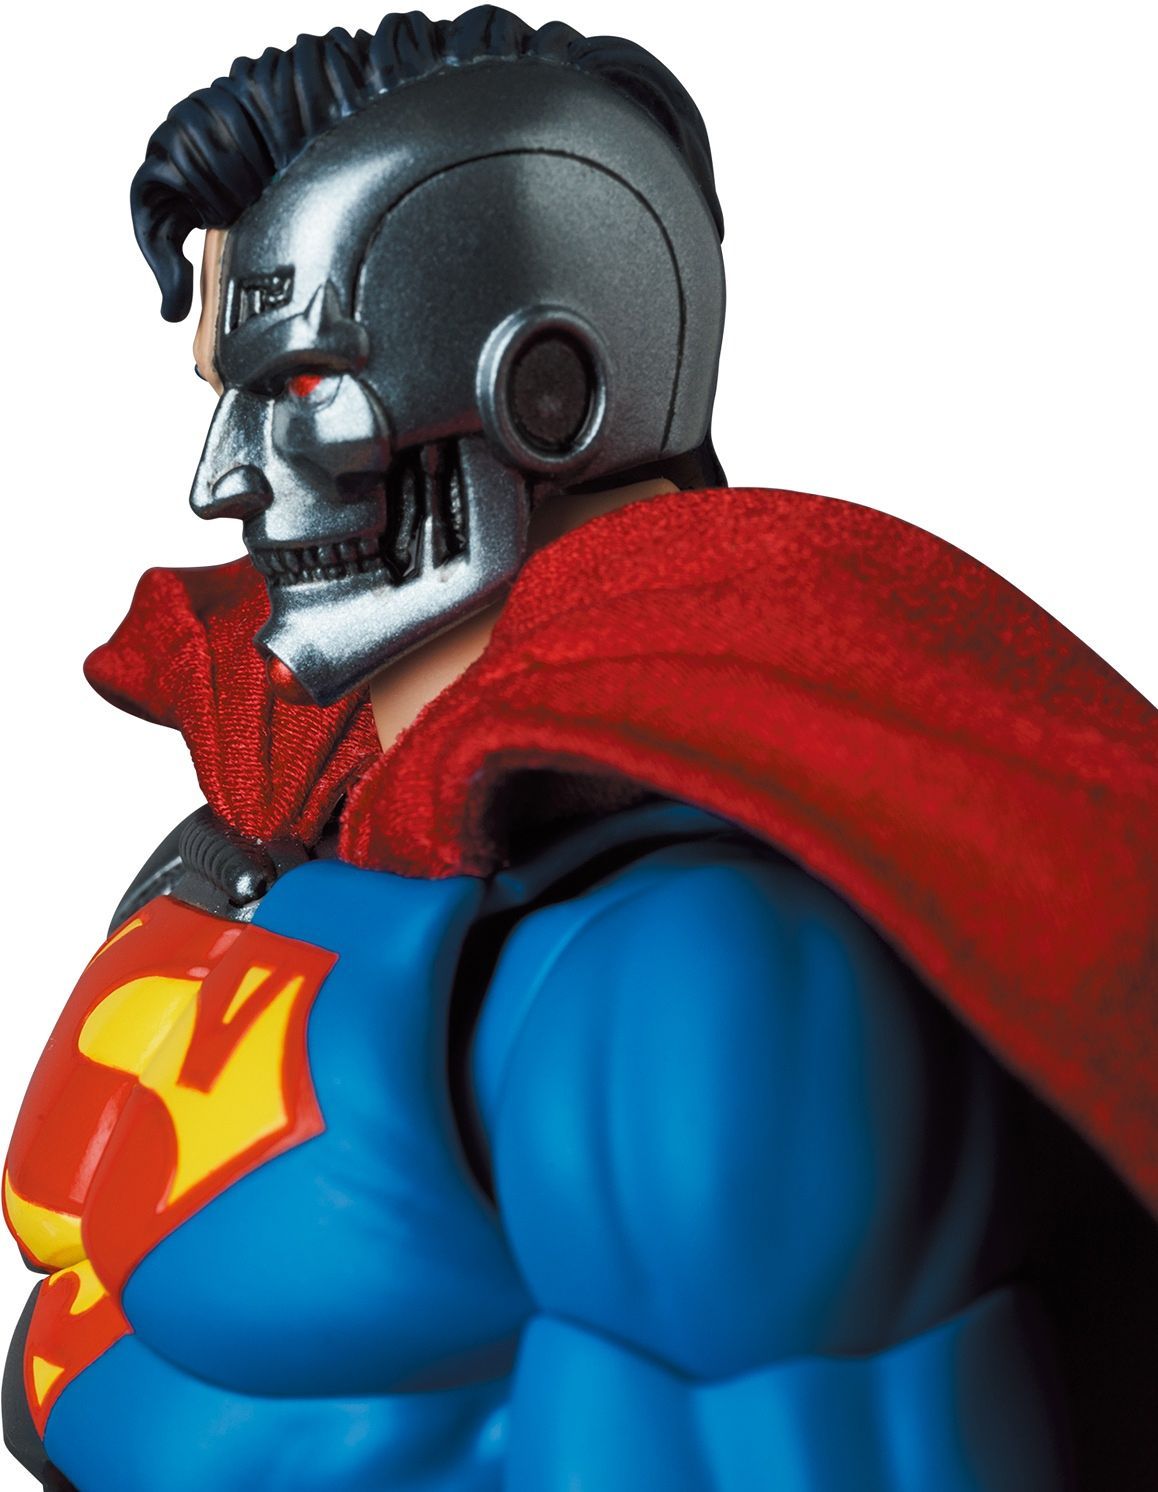 Medicom - MAFEX No. 164 - Return of Superman - Cyborg Superman - Marvelous Toys